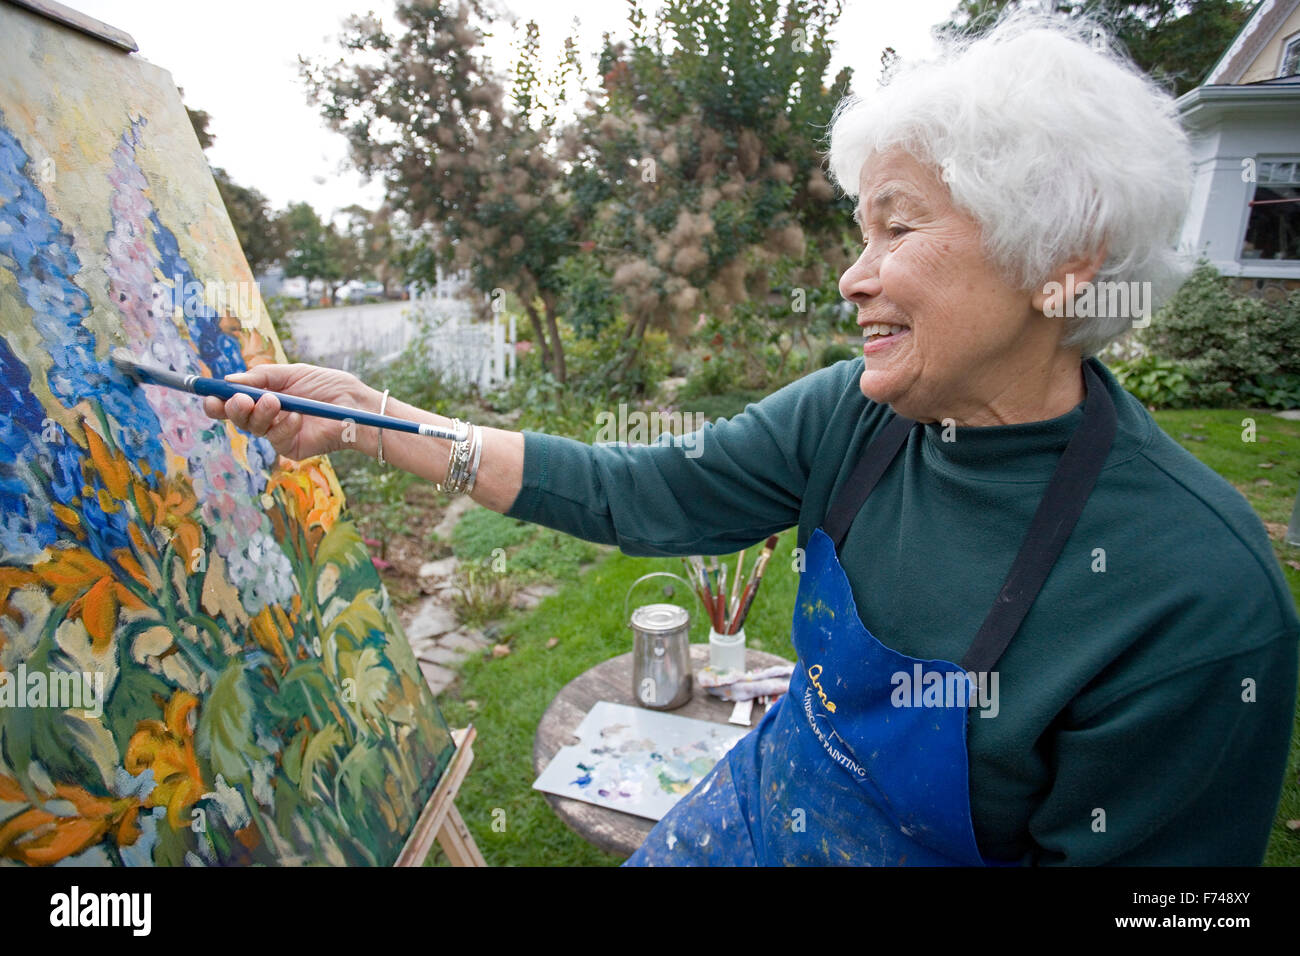 elderly artist painting in garden Stock Photo